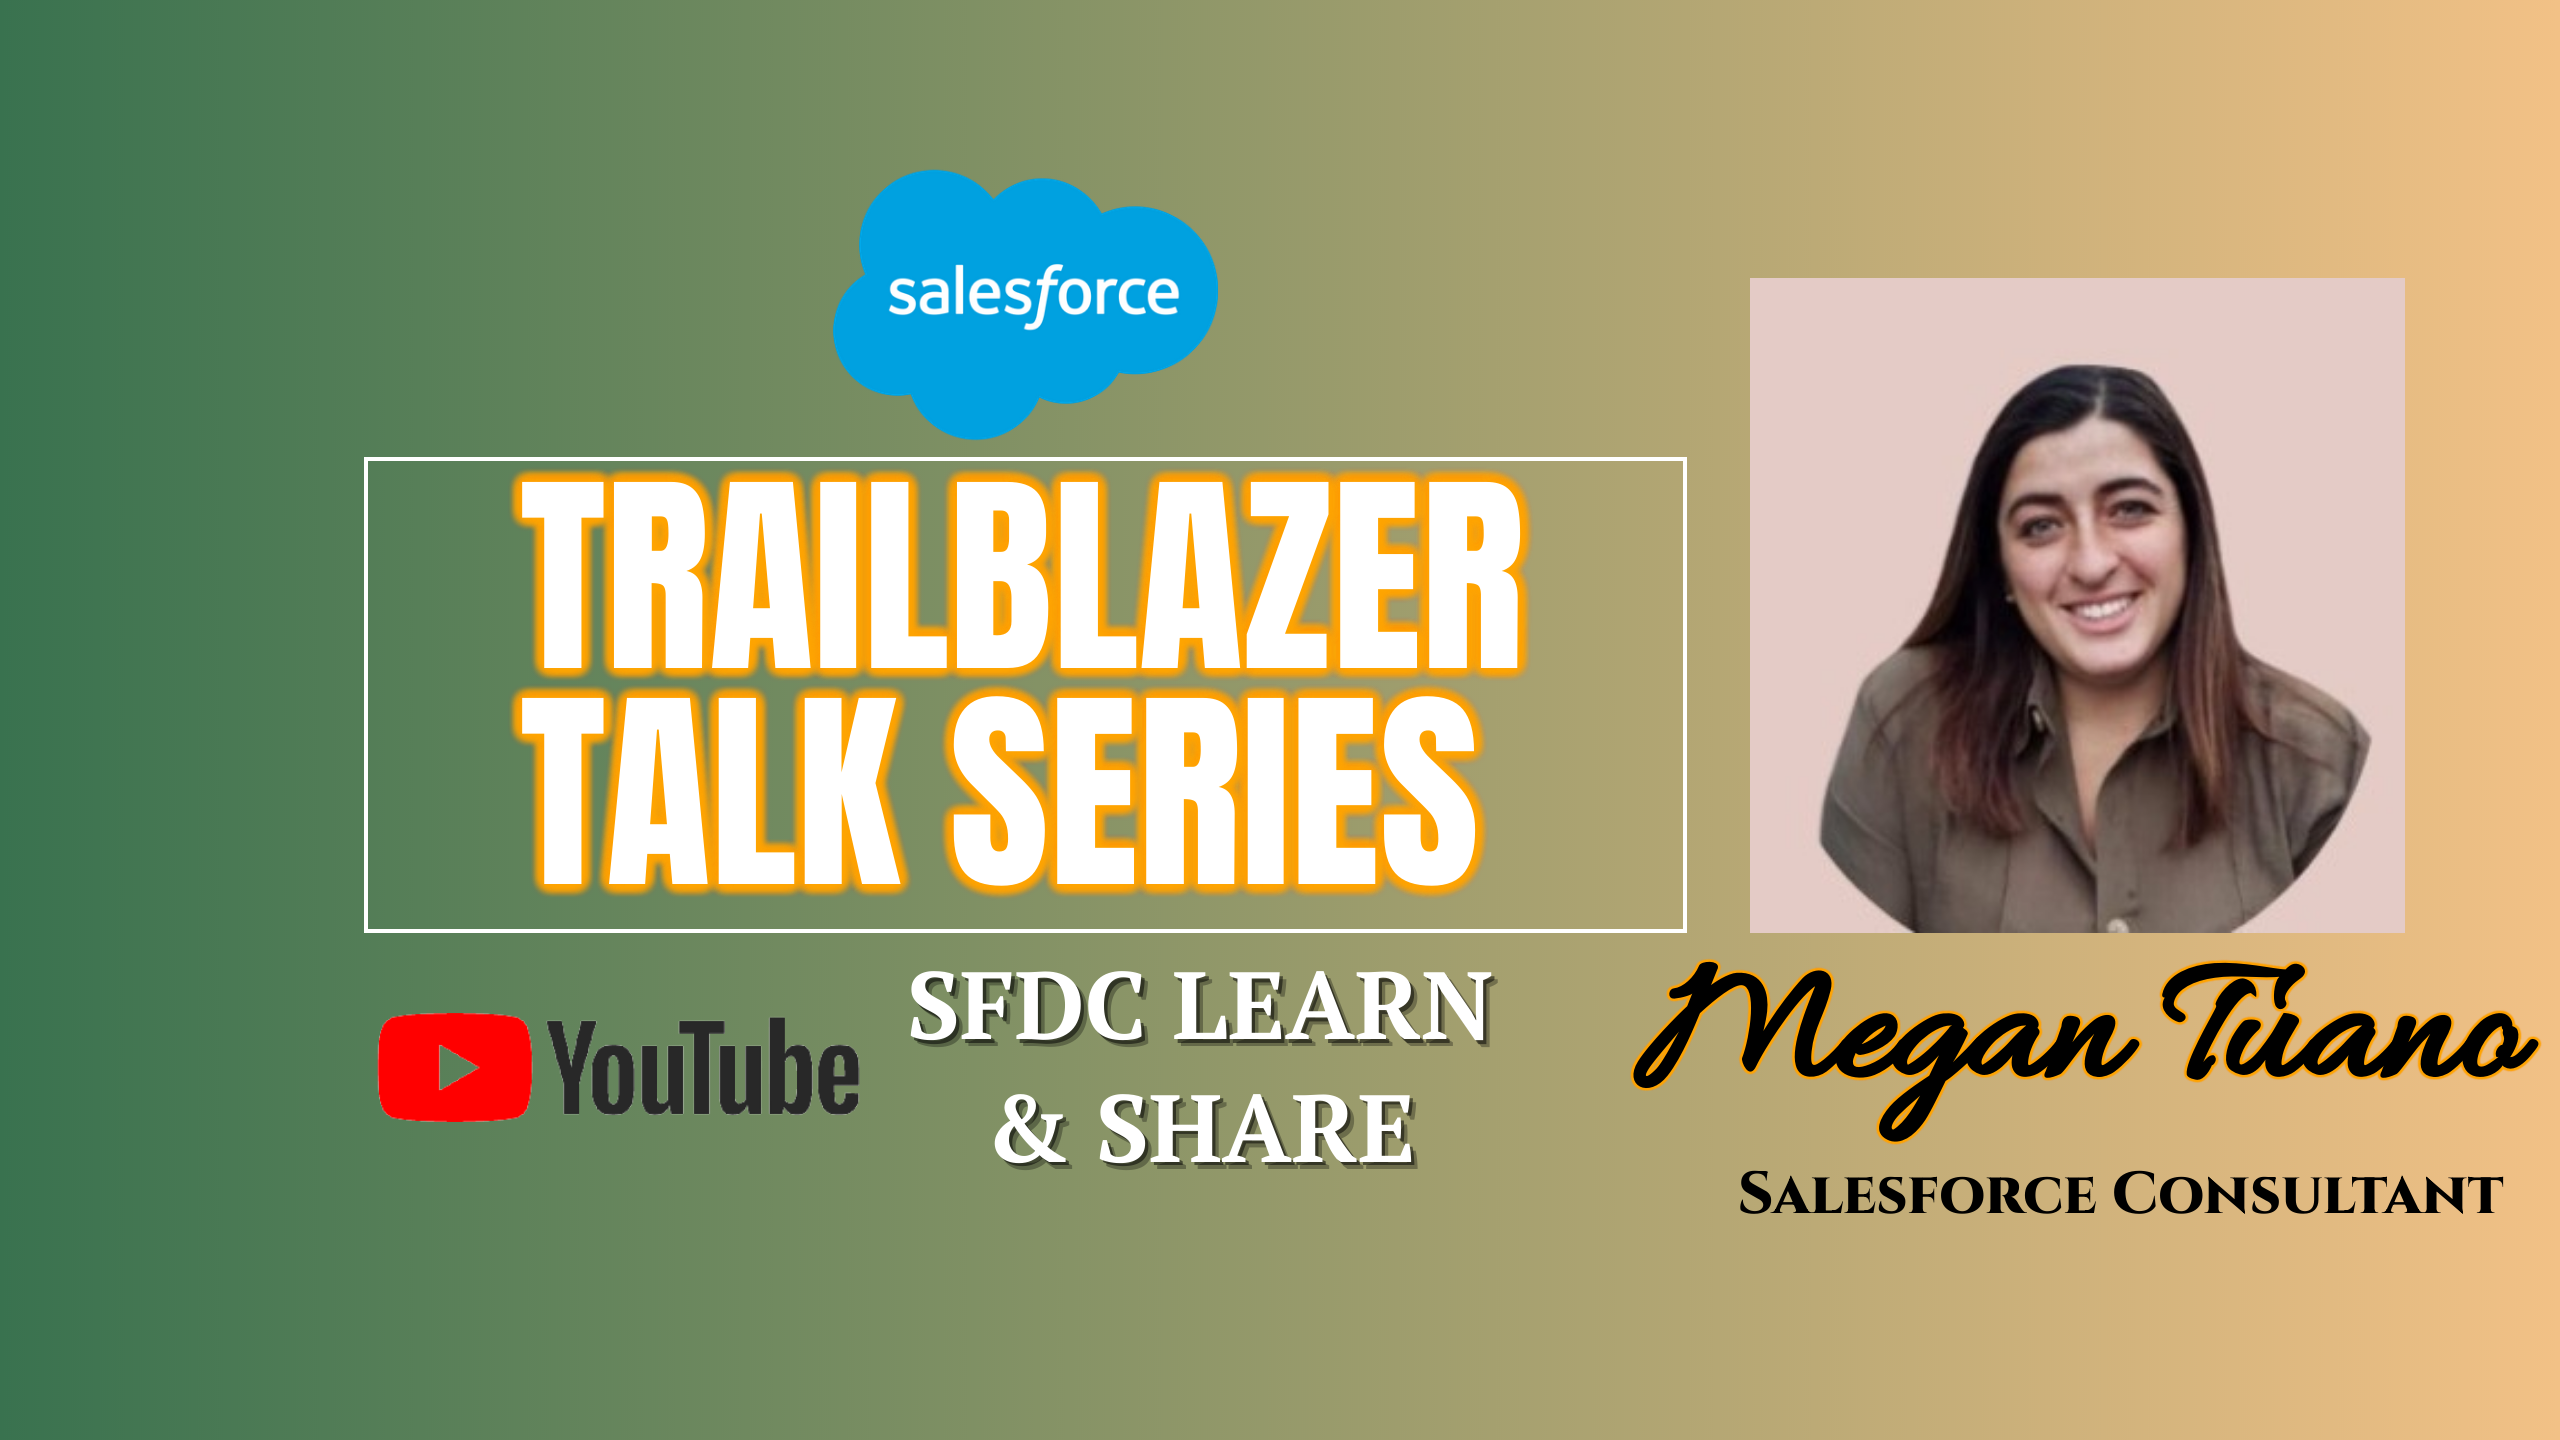 Megan Tuano - Trailblazer Talk Series